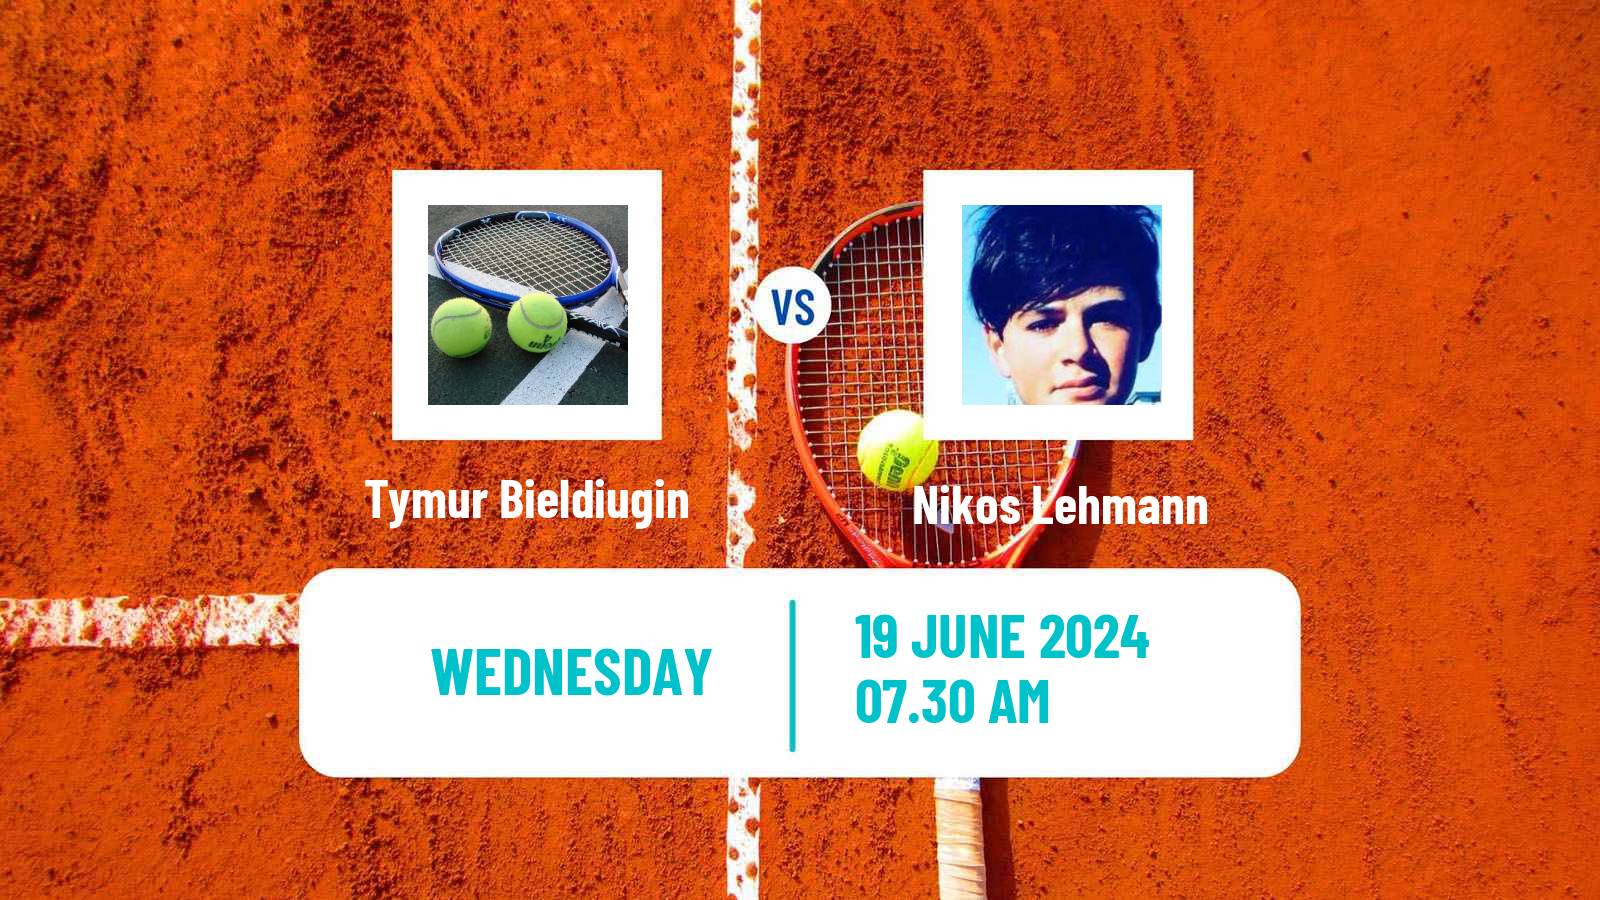 Tennis ITF M15 Nyiregyhaza 2 Men Tymur Bieldiugin - Nikos Lehmann